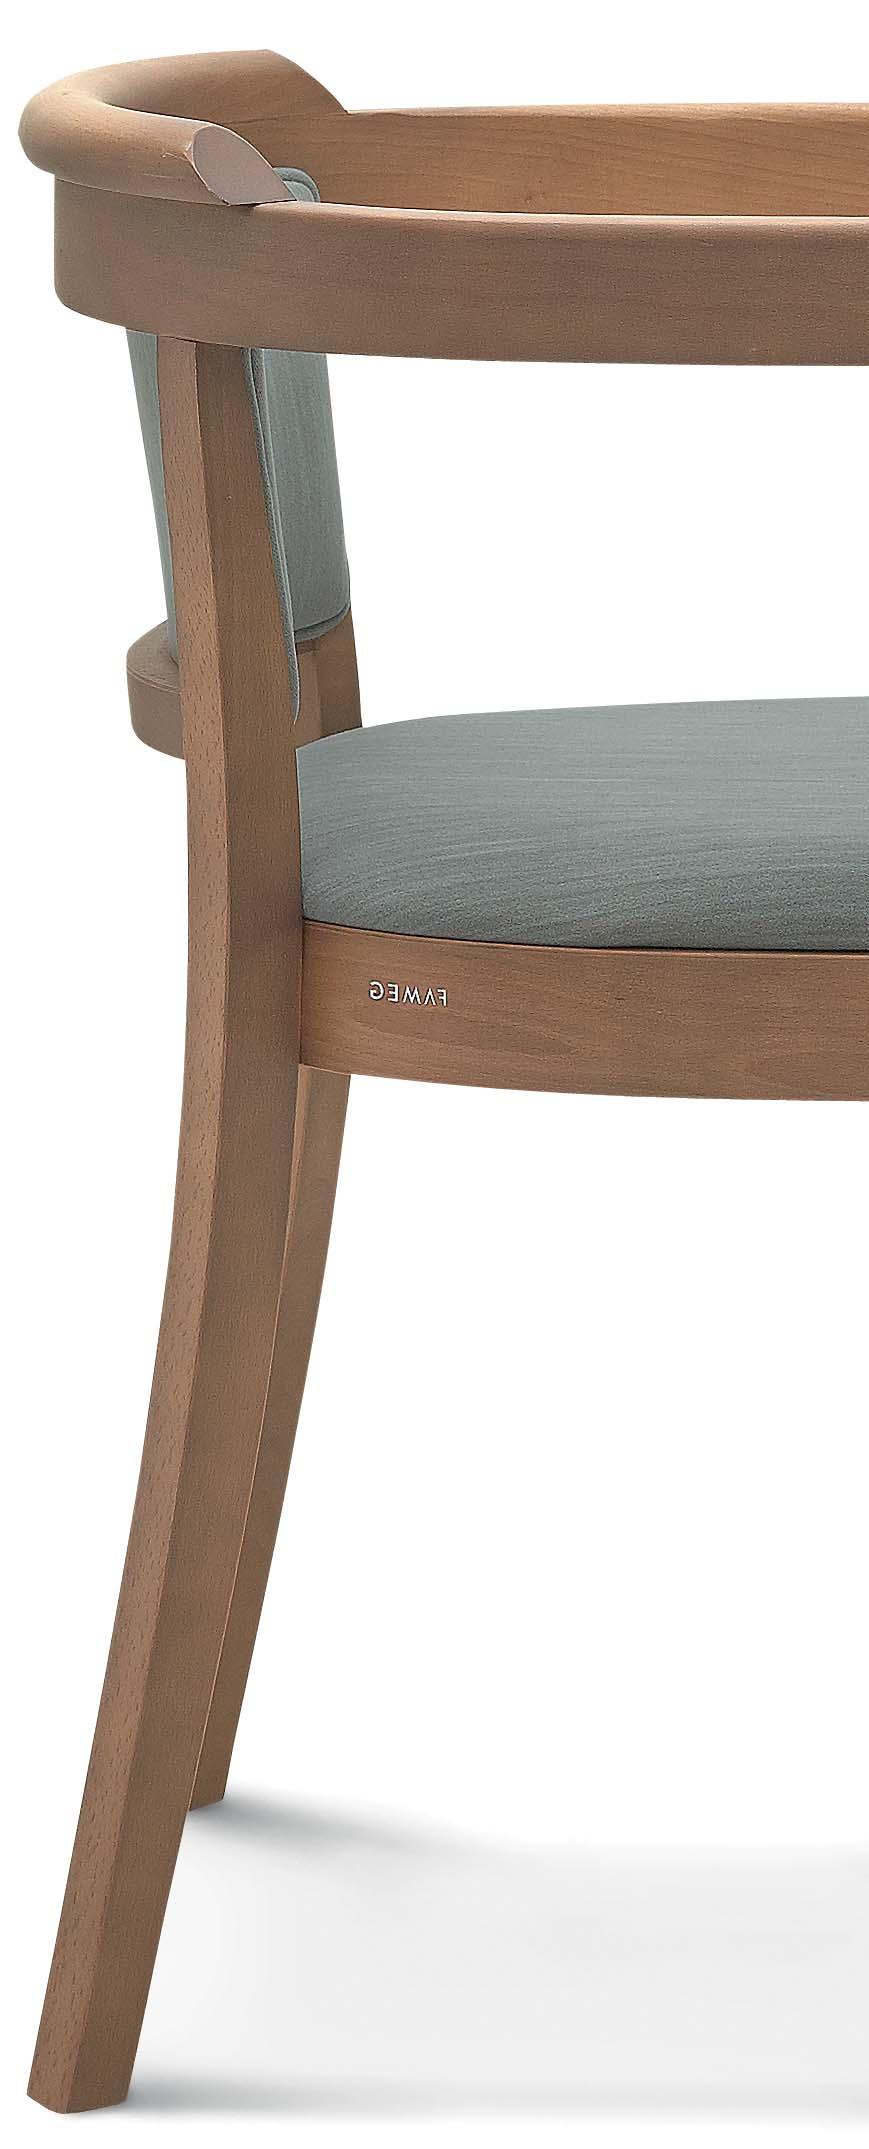 użytkowników. // Elegant armchair with ideal proportions. Classic, simple design.